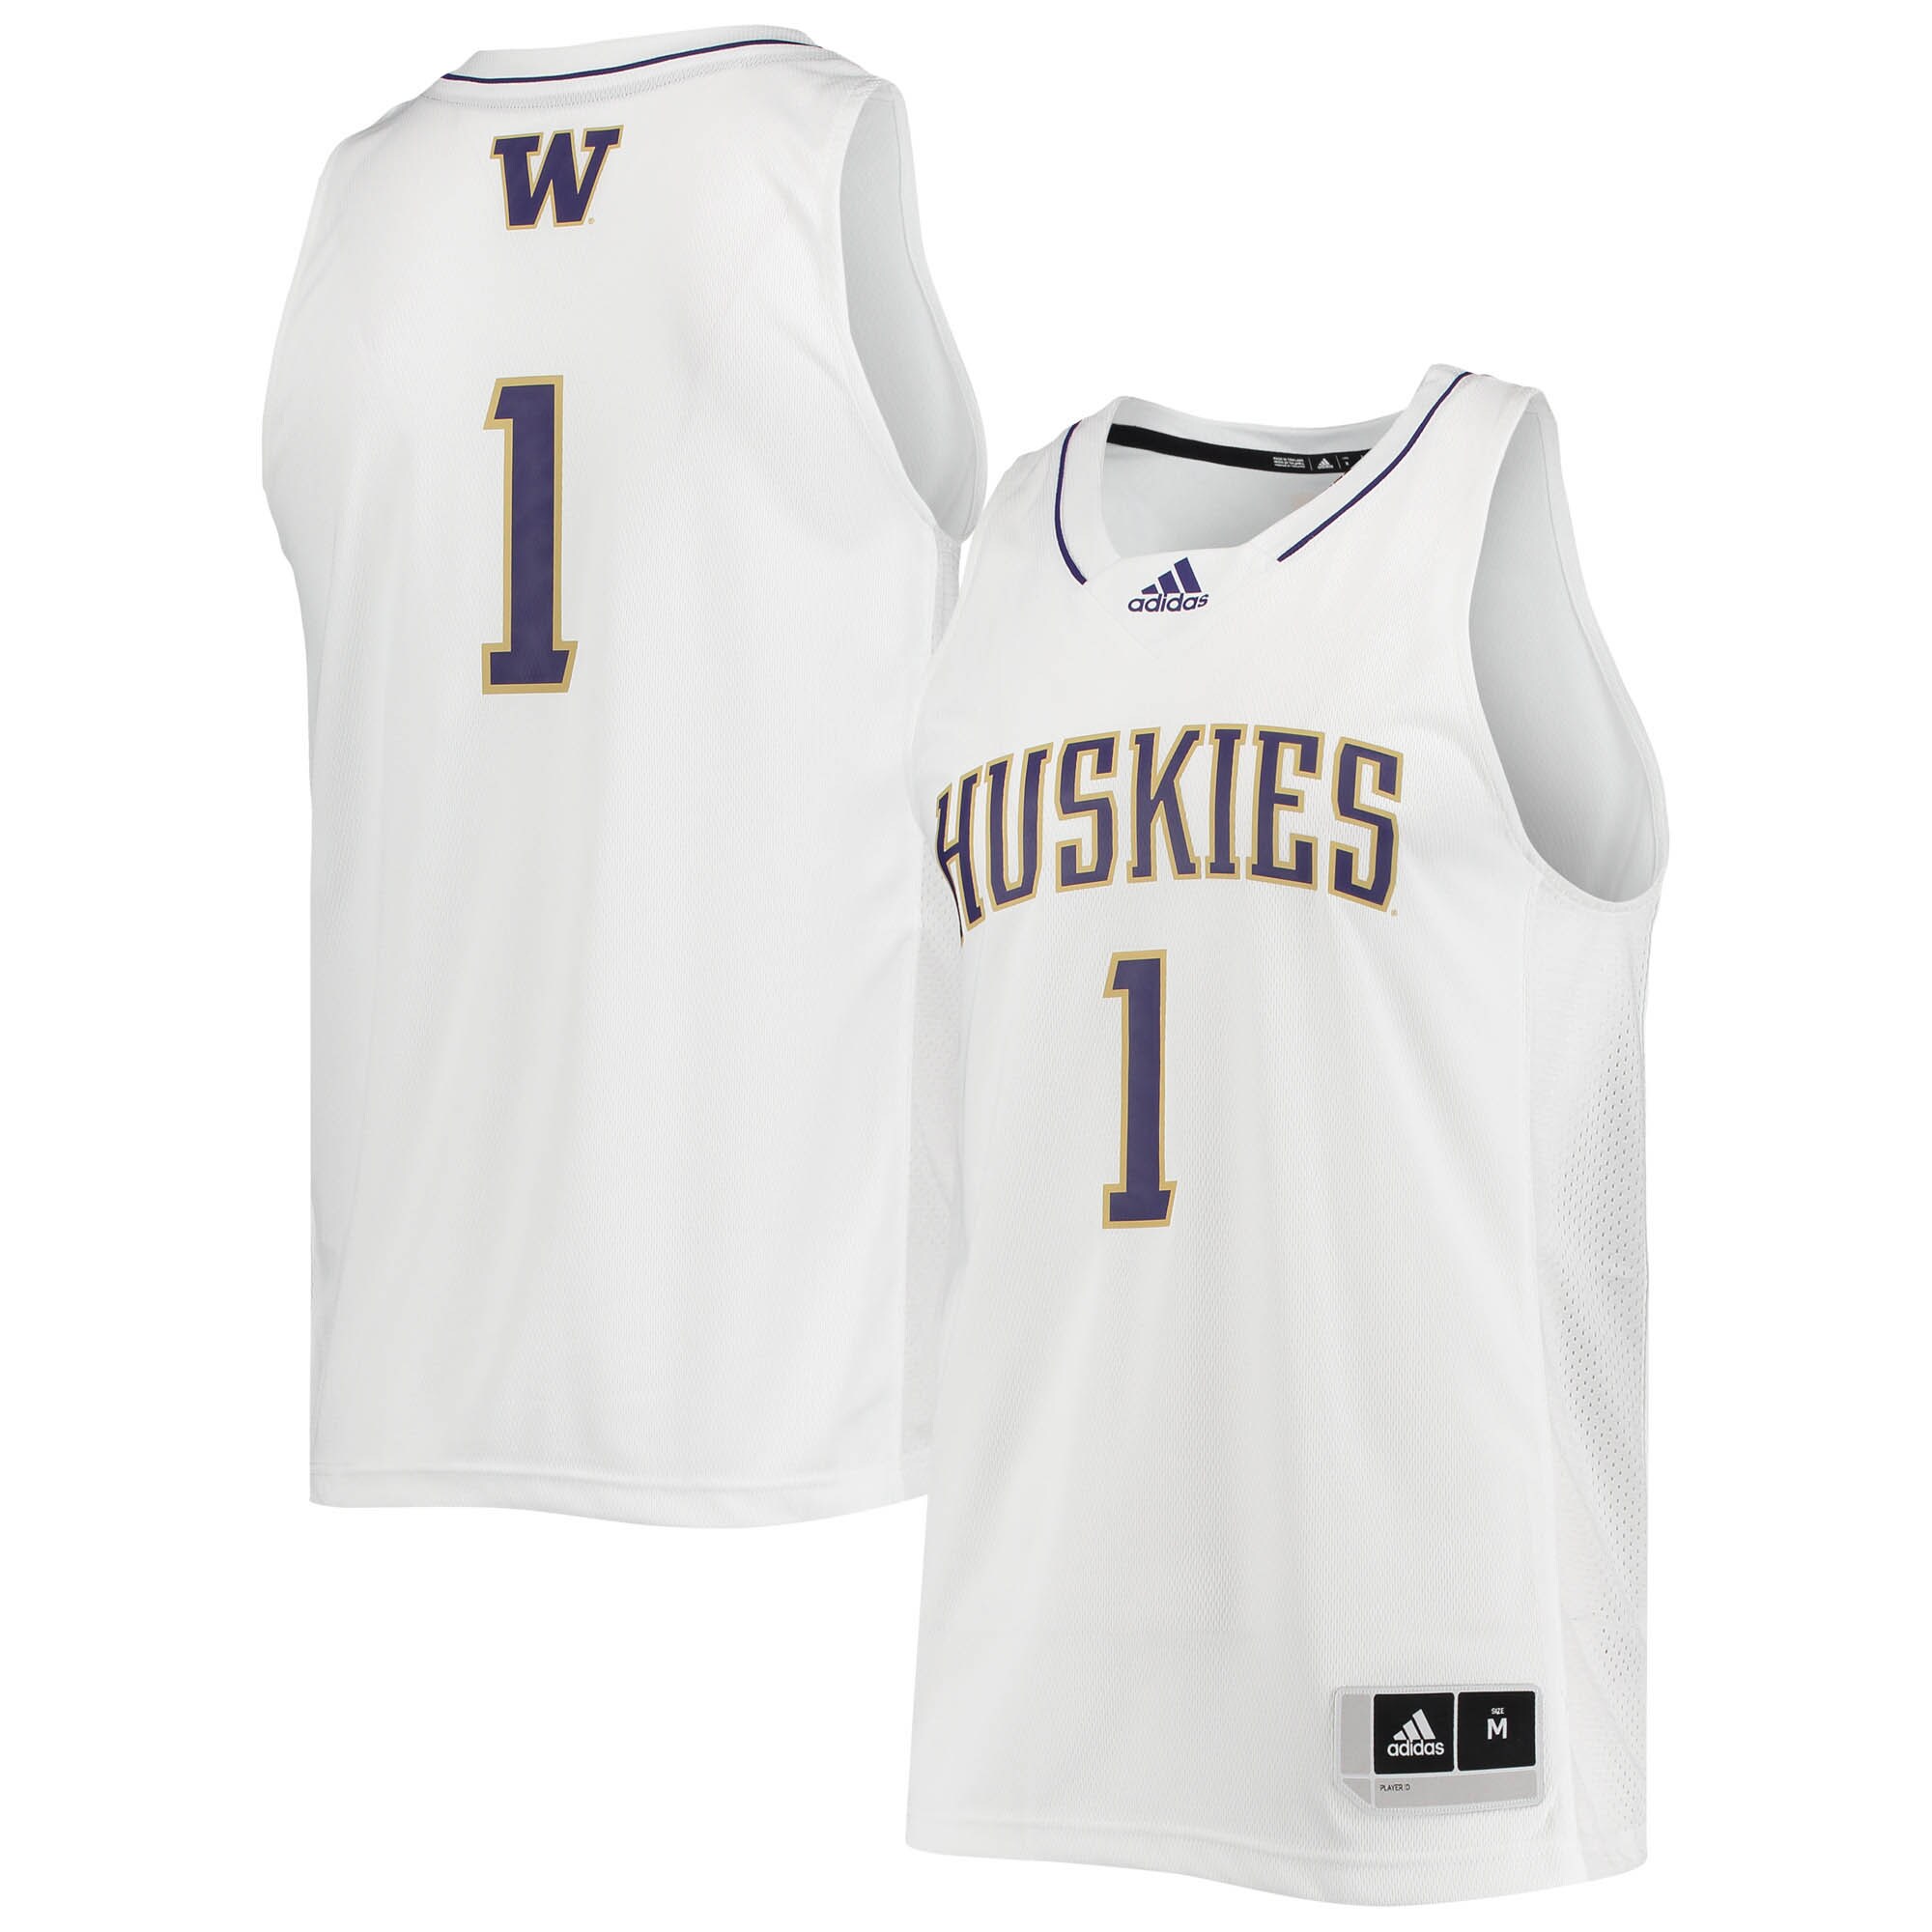 #1 Washington Huskies   Swingman Basketball Jersey - White For Youth Women Men